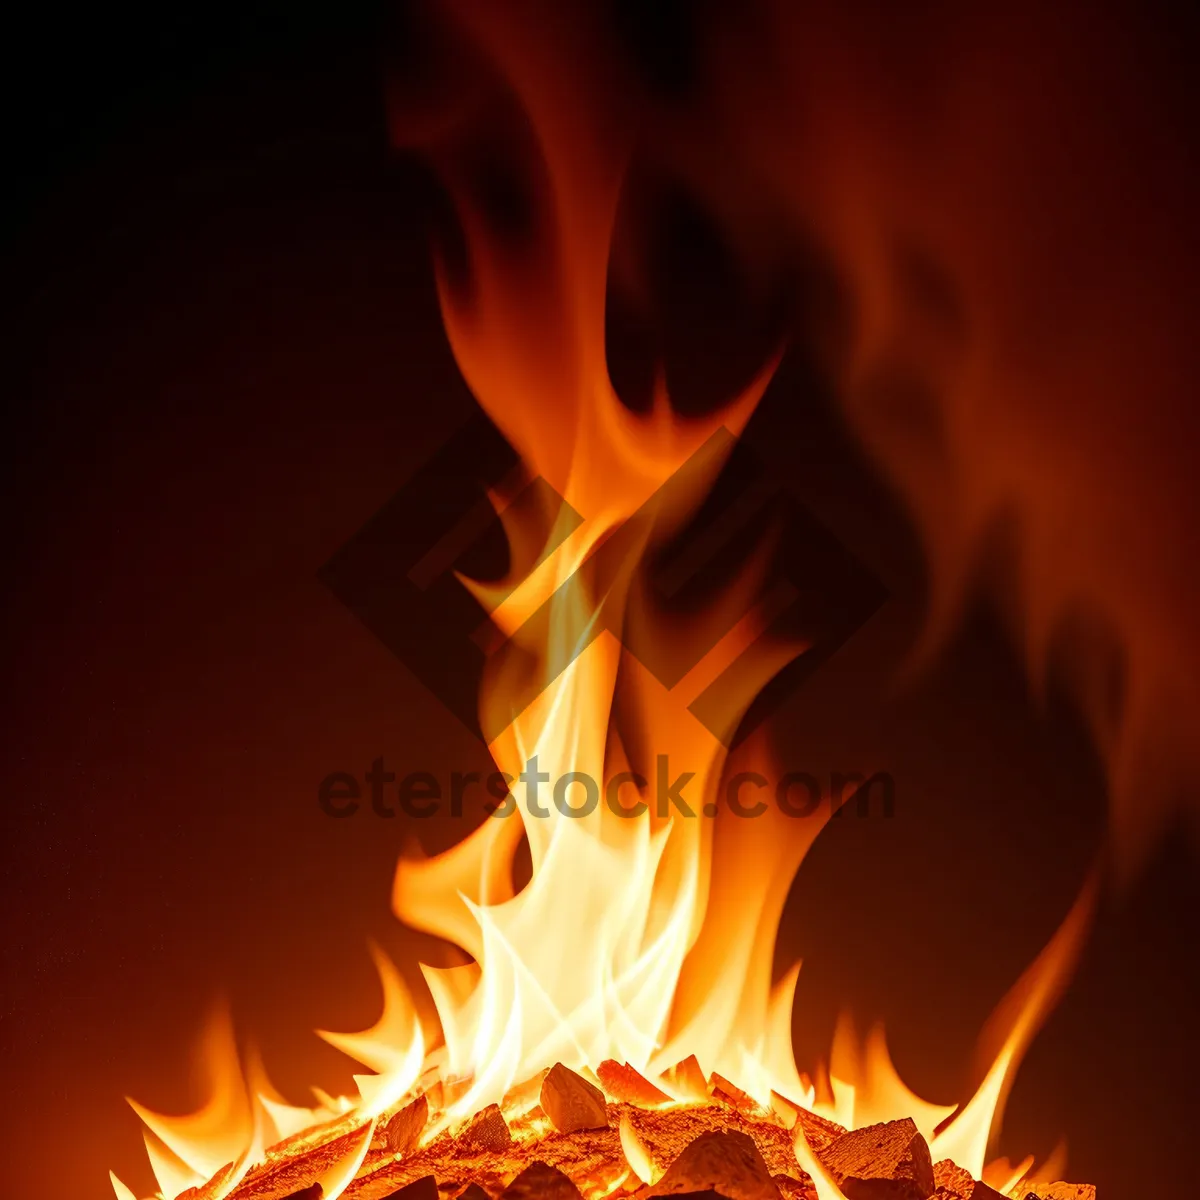 Picture of Blazing Heat: Fiery Inferno of Orange Flames.